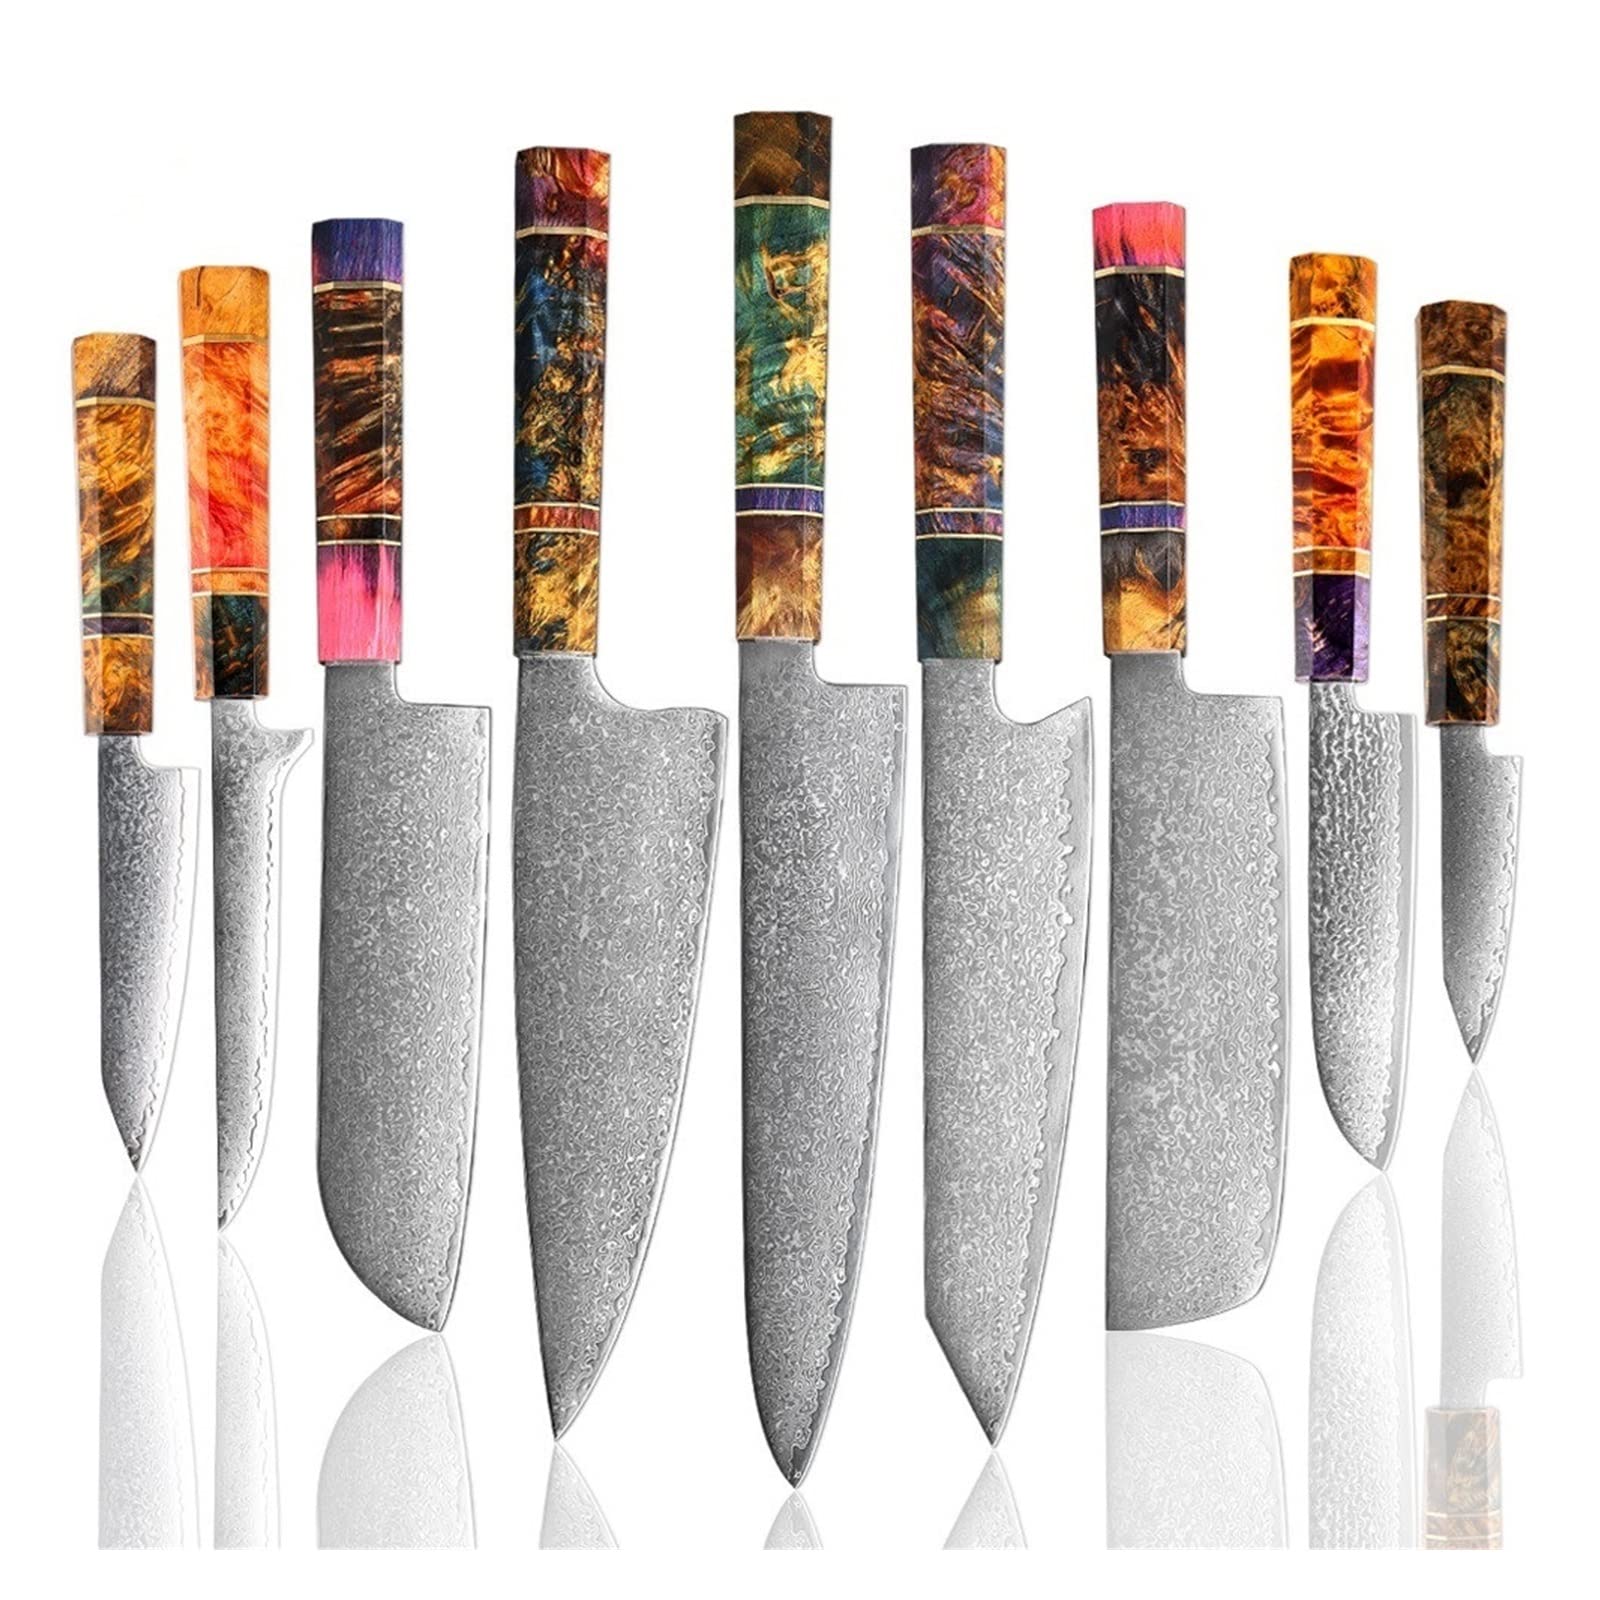 Küchenmesser Chef Messer Damaskus VG10 Japaner Damaskus Stahl Kiritsuke Gyuto Messer stabiler Holzgriff sehr scharf küchenmesser set (Color : A-9PCS)